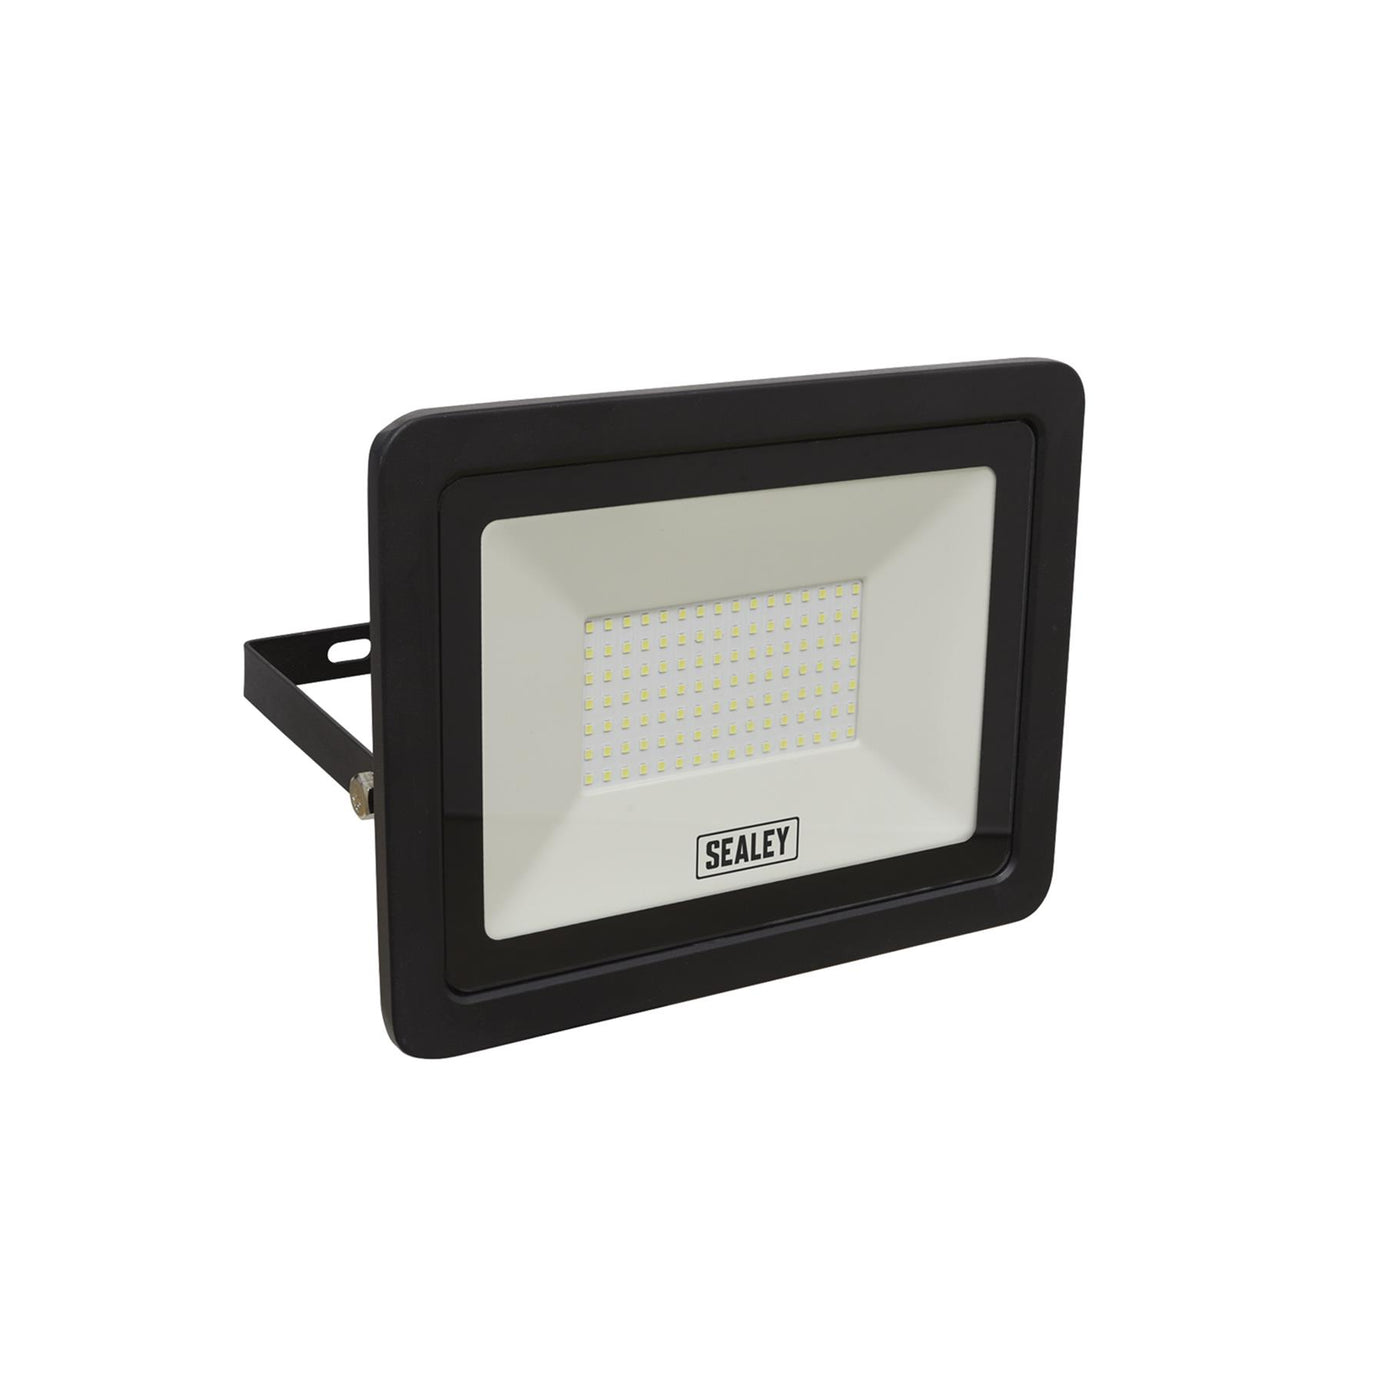 Sealey Extra Slim Floodlight with Wall Bracket 100W SMD LED